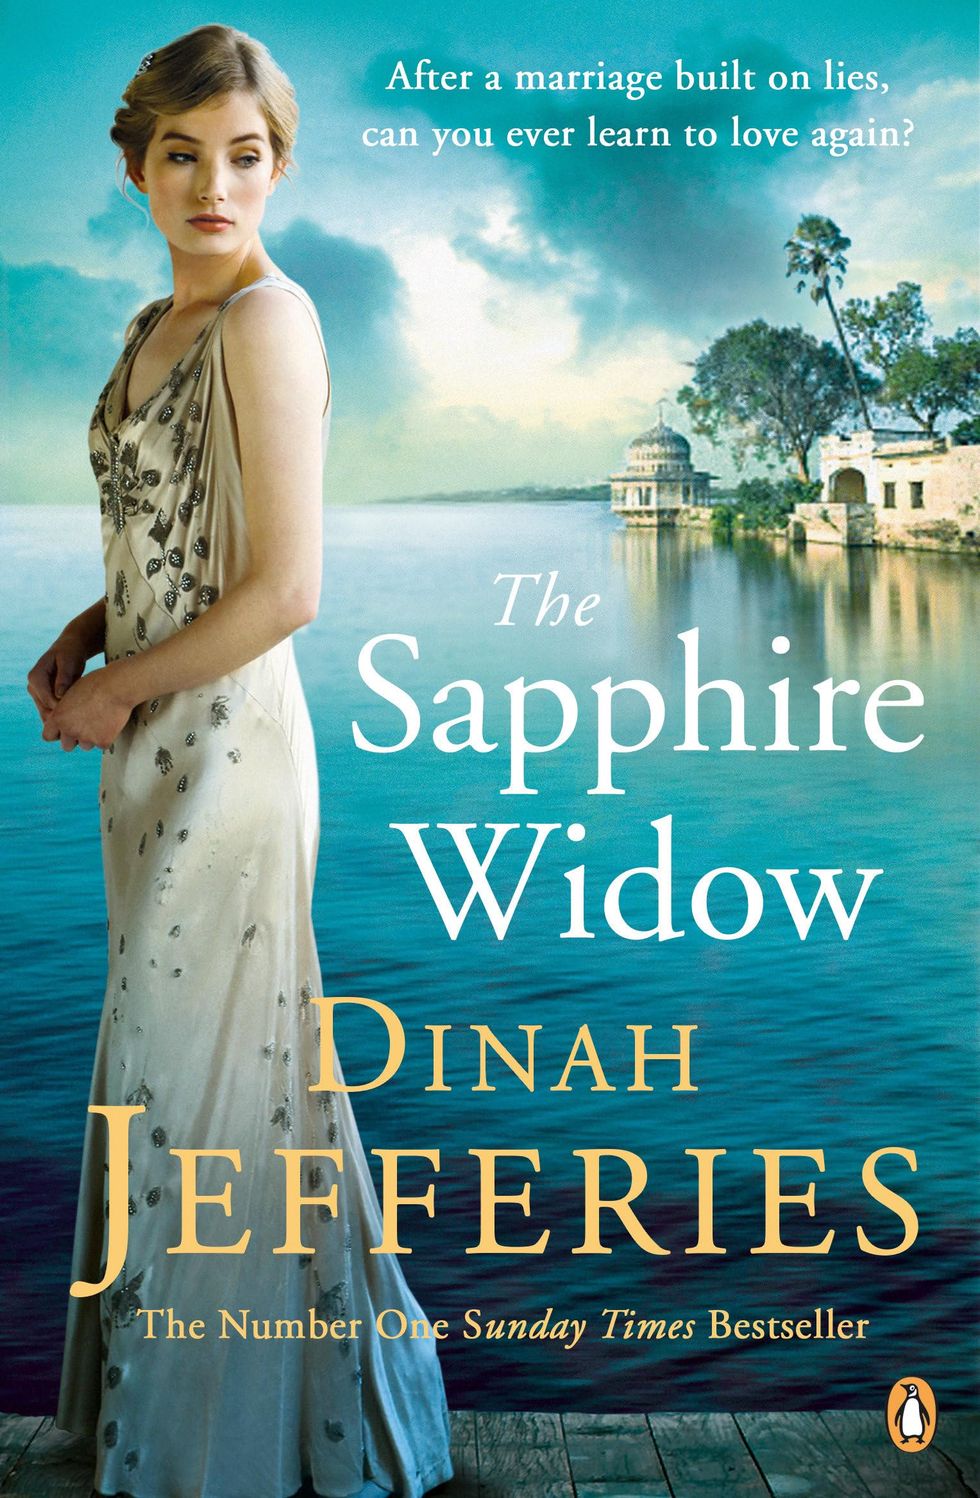 The Sapphire Widow by Dinah Jeffries